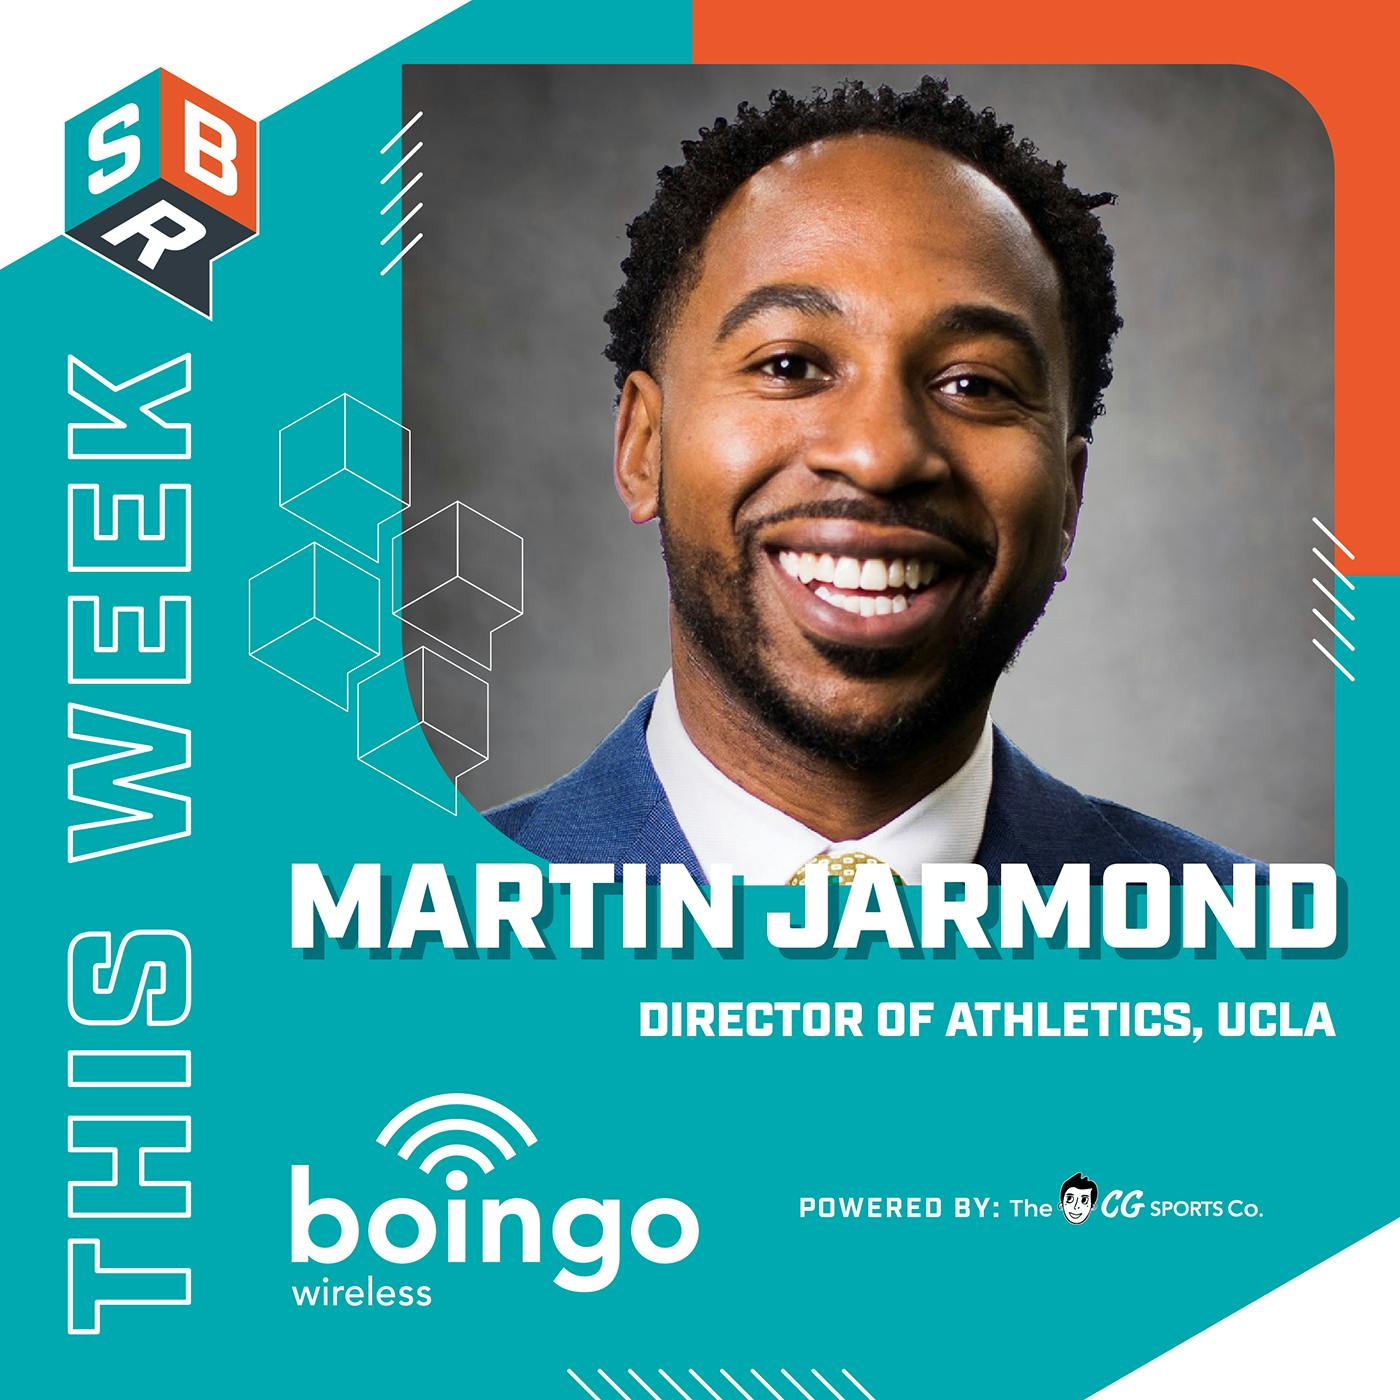 Martin Jarmond - UCLA Director of Athletics